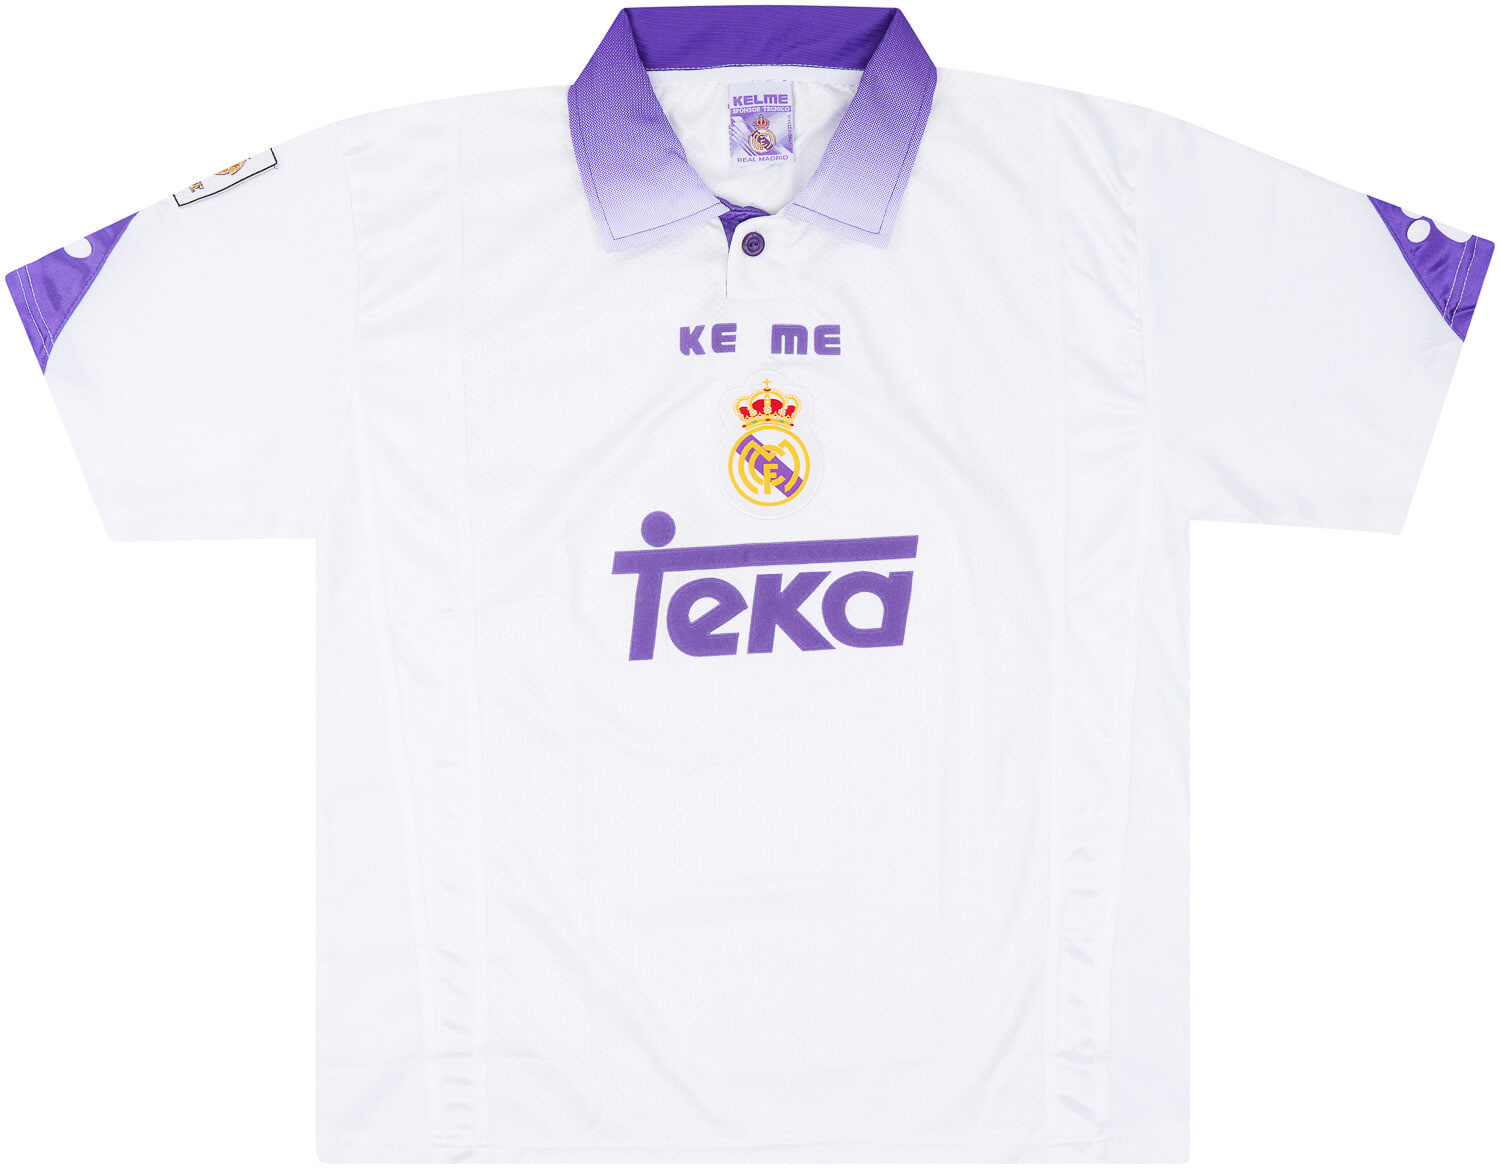 Hummel, Shirts, Real Madrid 992 1993 Teka Home Hummel Soccer Jersey L